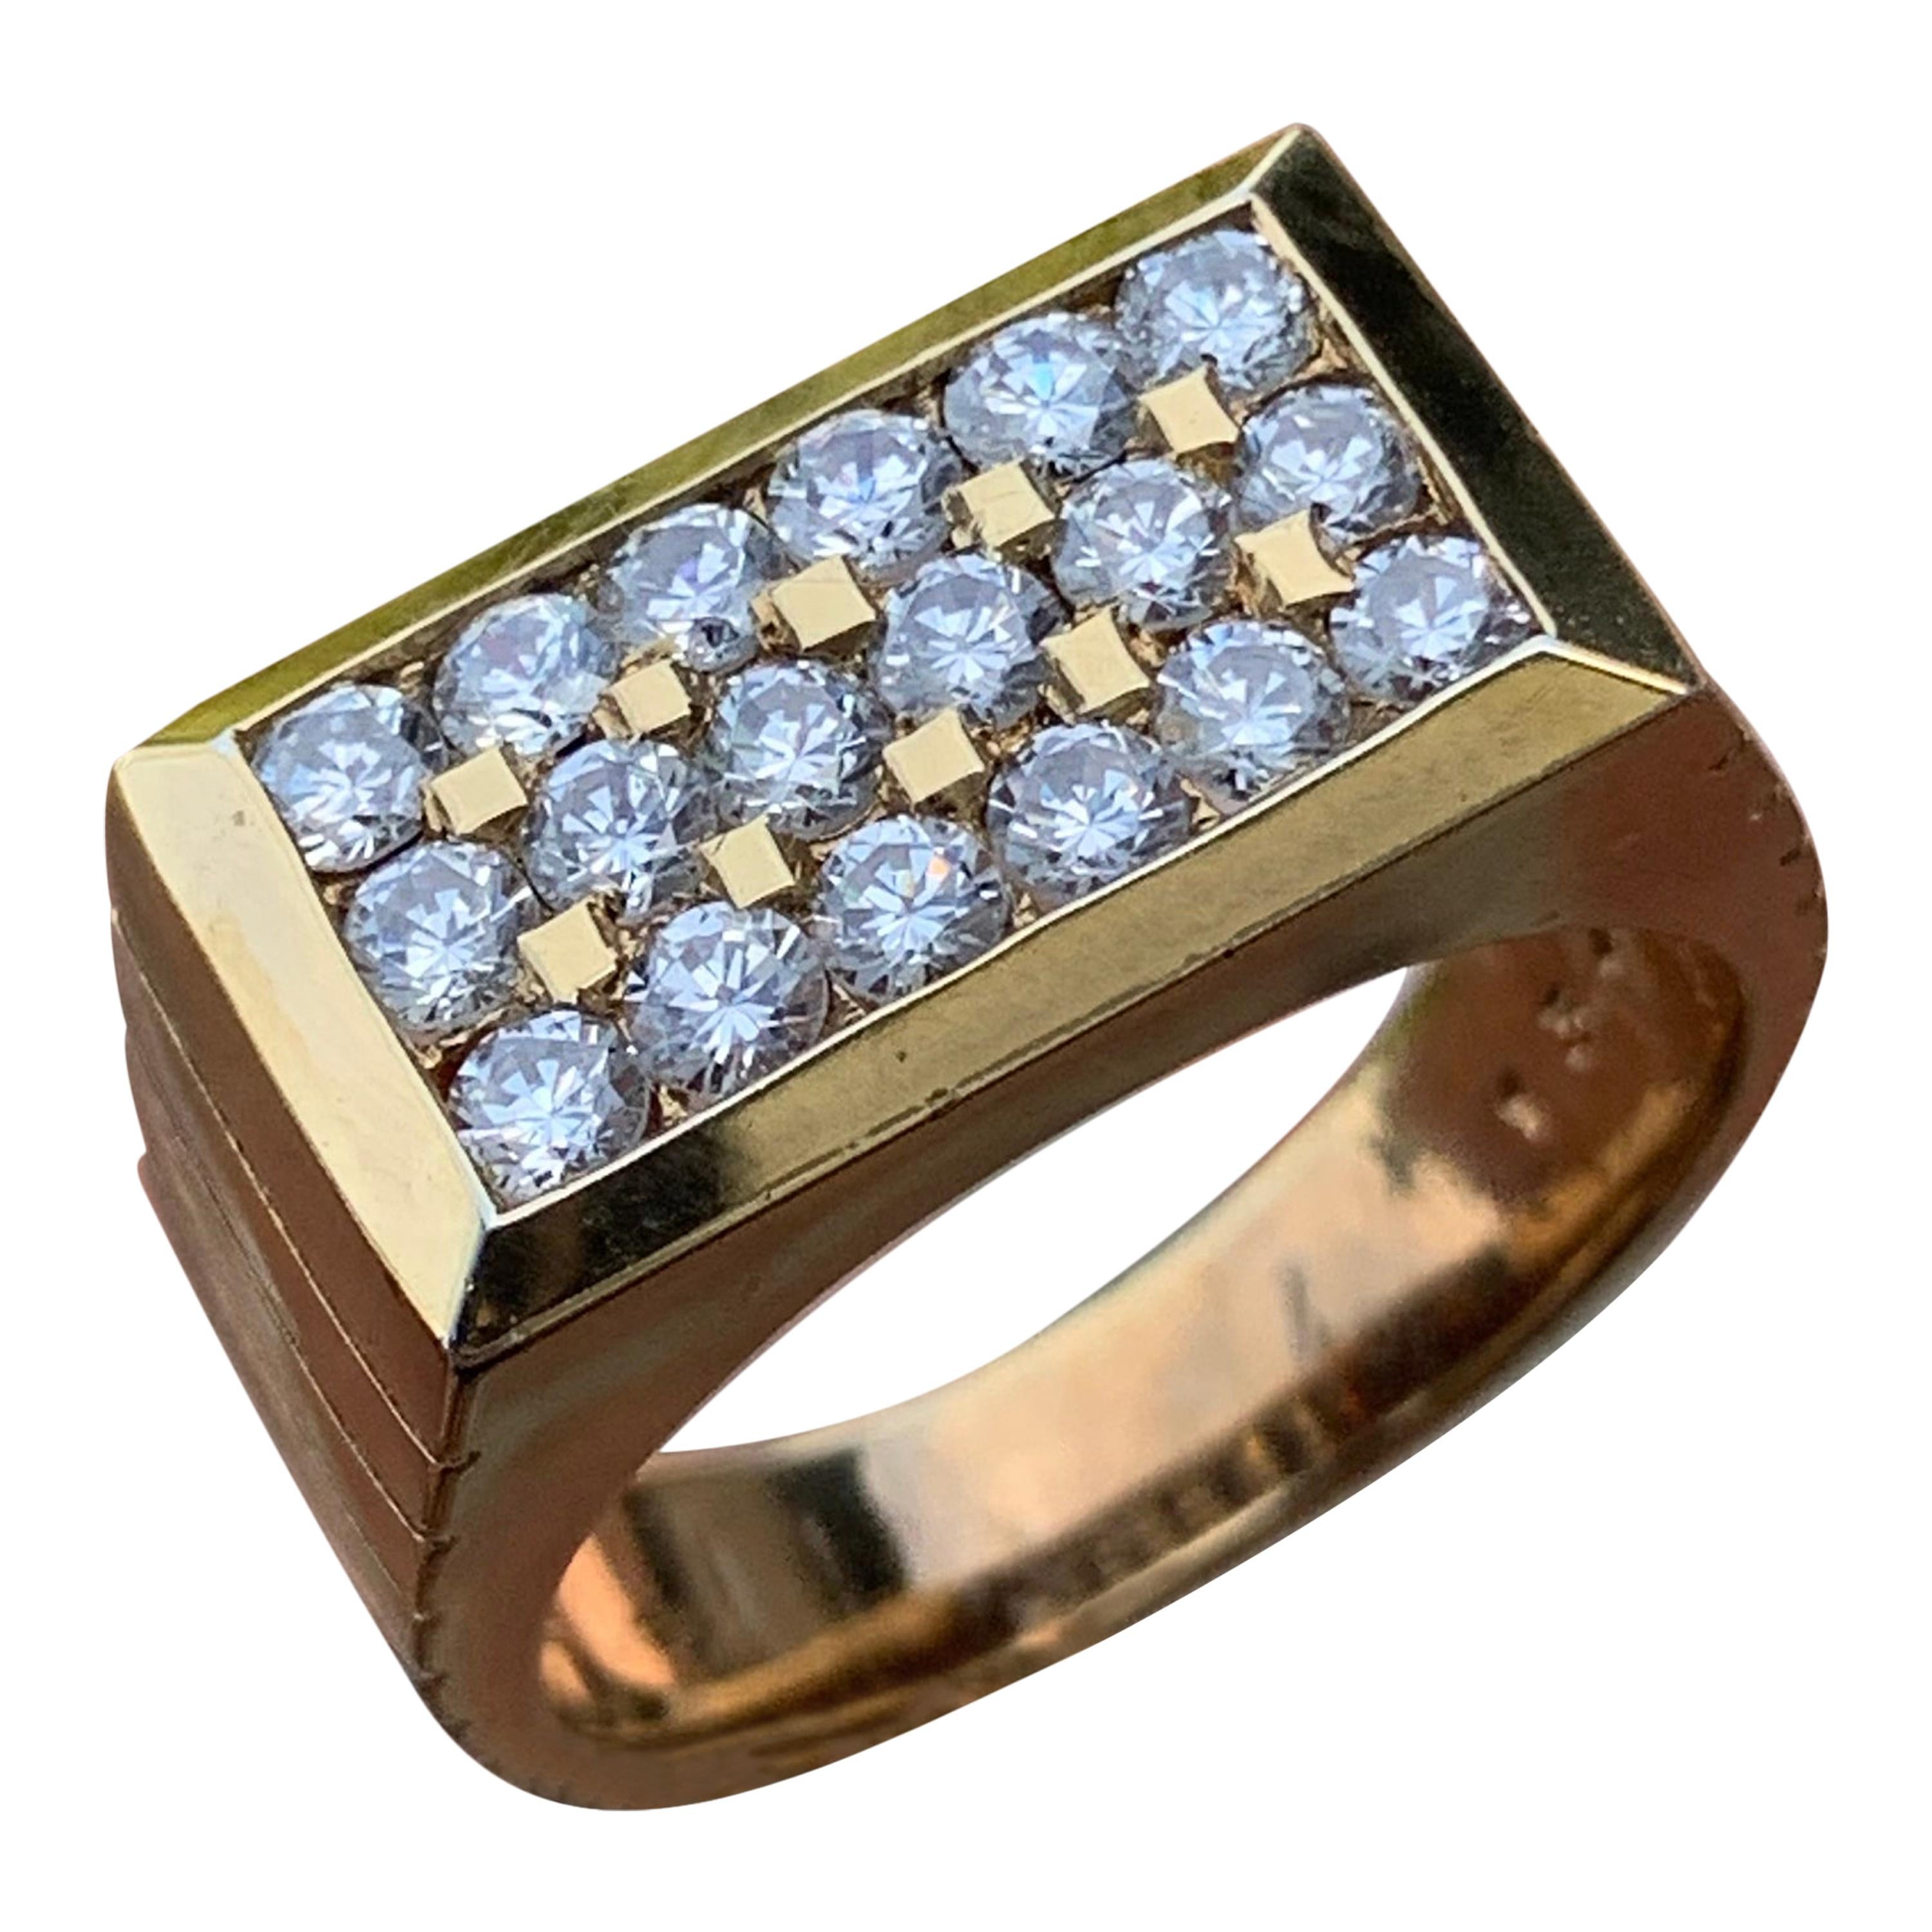 1.08 Carat Diamond Ring/Band, 10 Karat, 1980s Ben Dannie Original Design For Sale